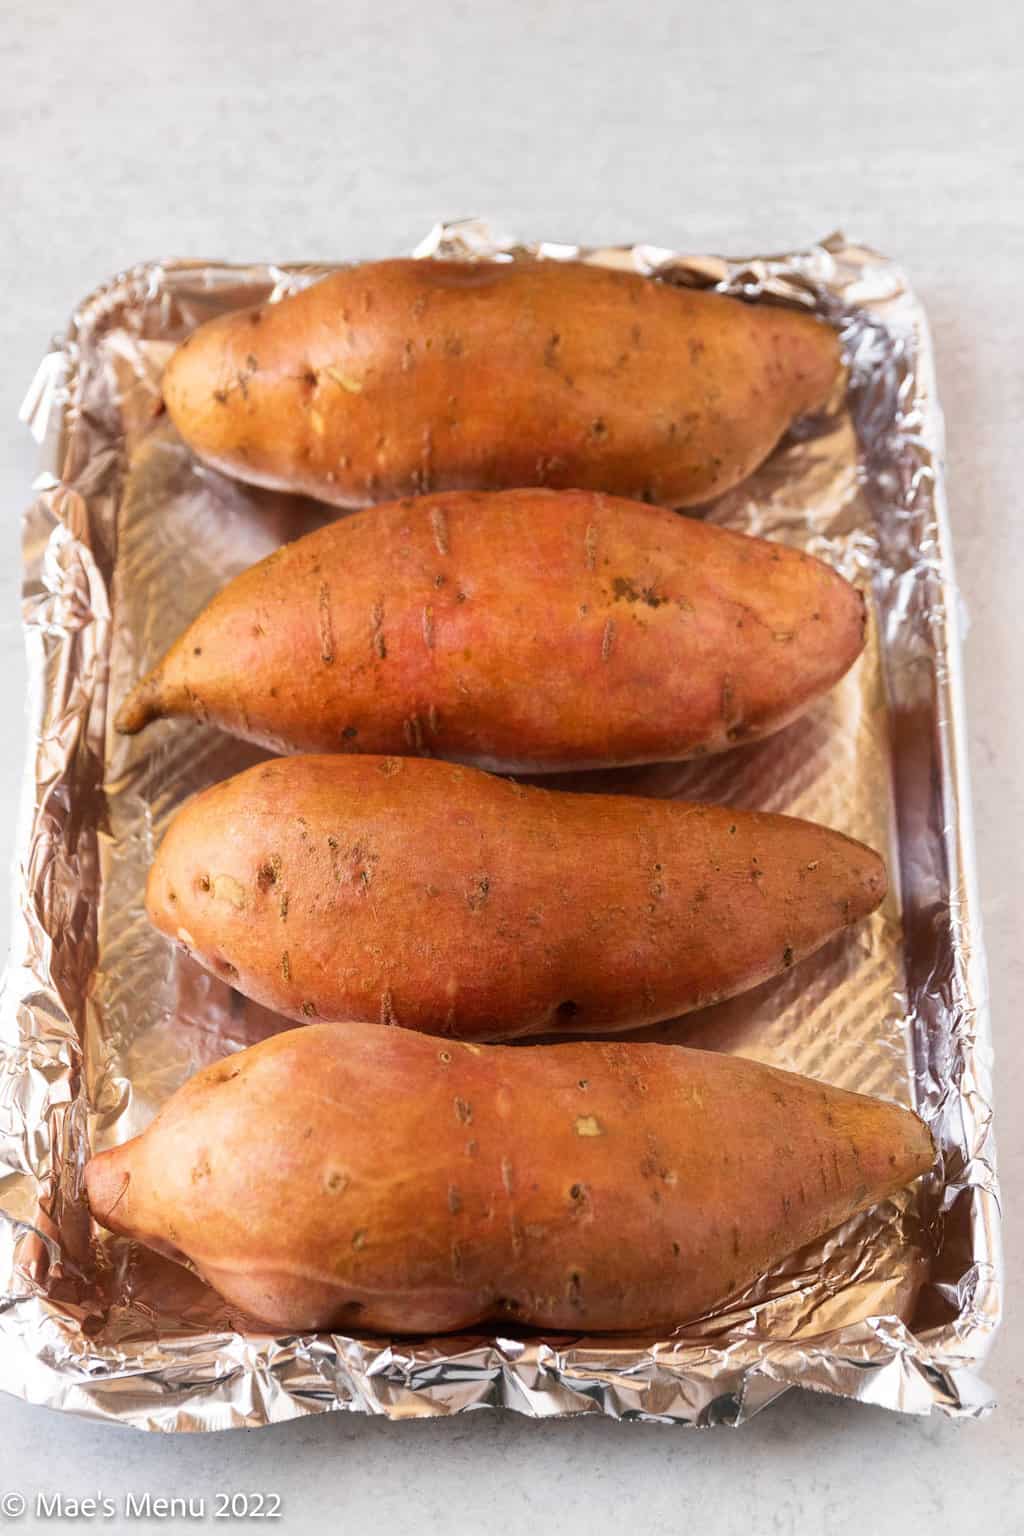 A foil lined baking sheet of sweet potatoes.